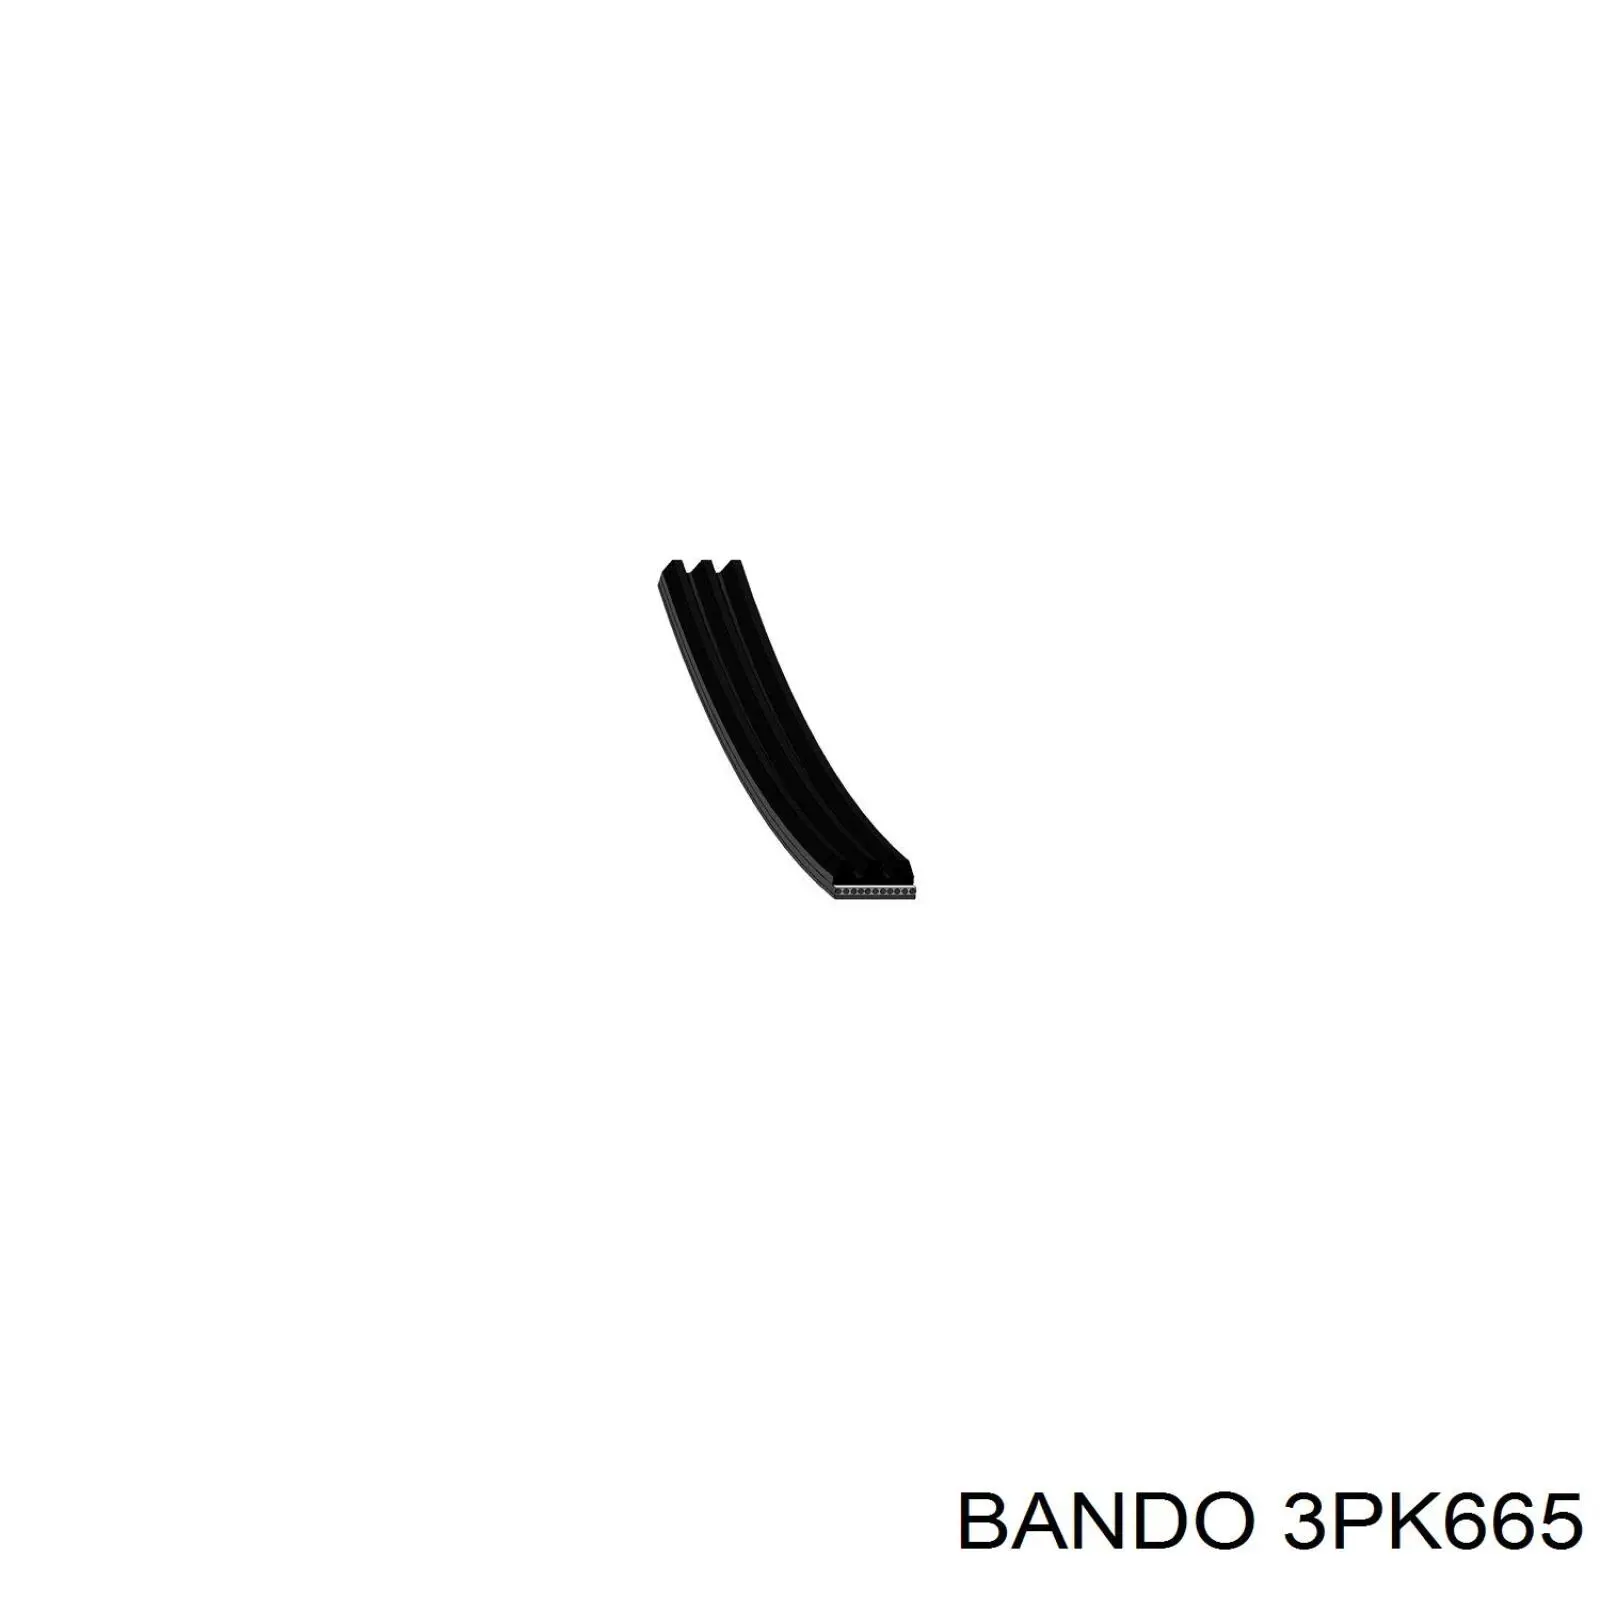 3PK665 Bando correa trapezoidal